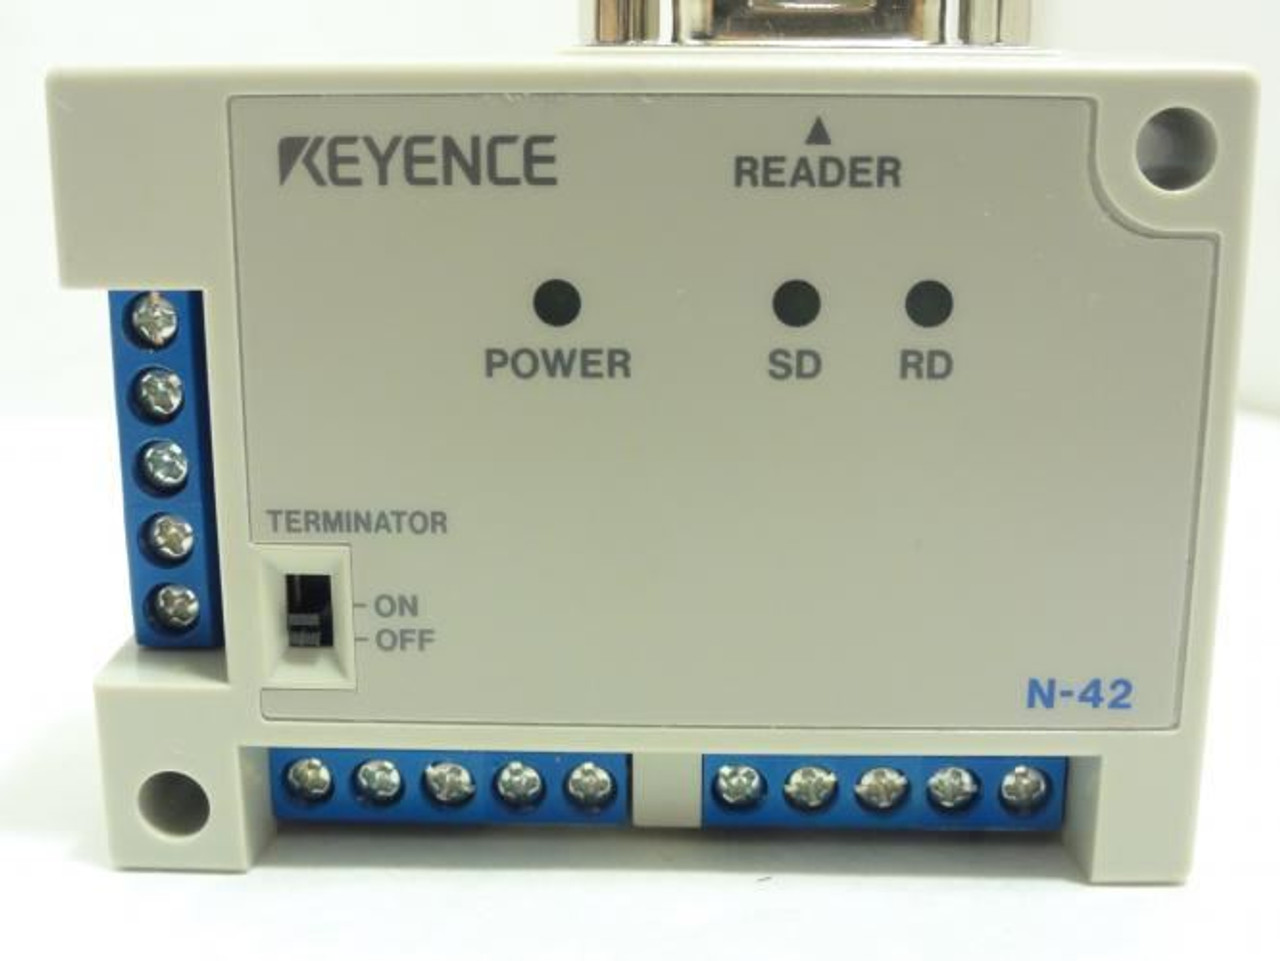 Keyence N-42; Dedicated Power Supply 24VDC 260mA; For Series: BL